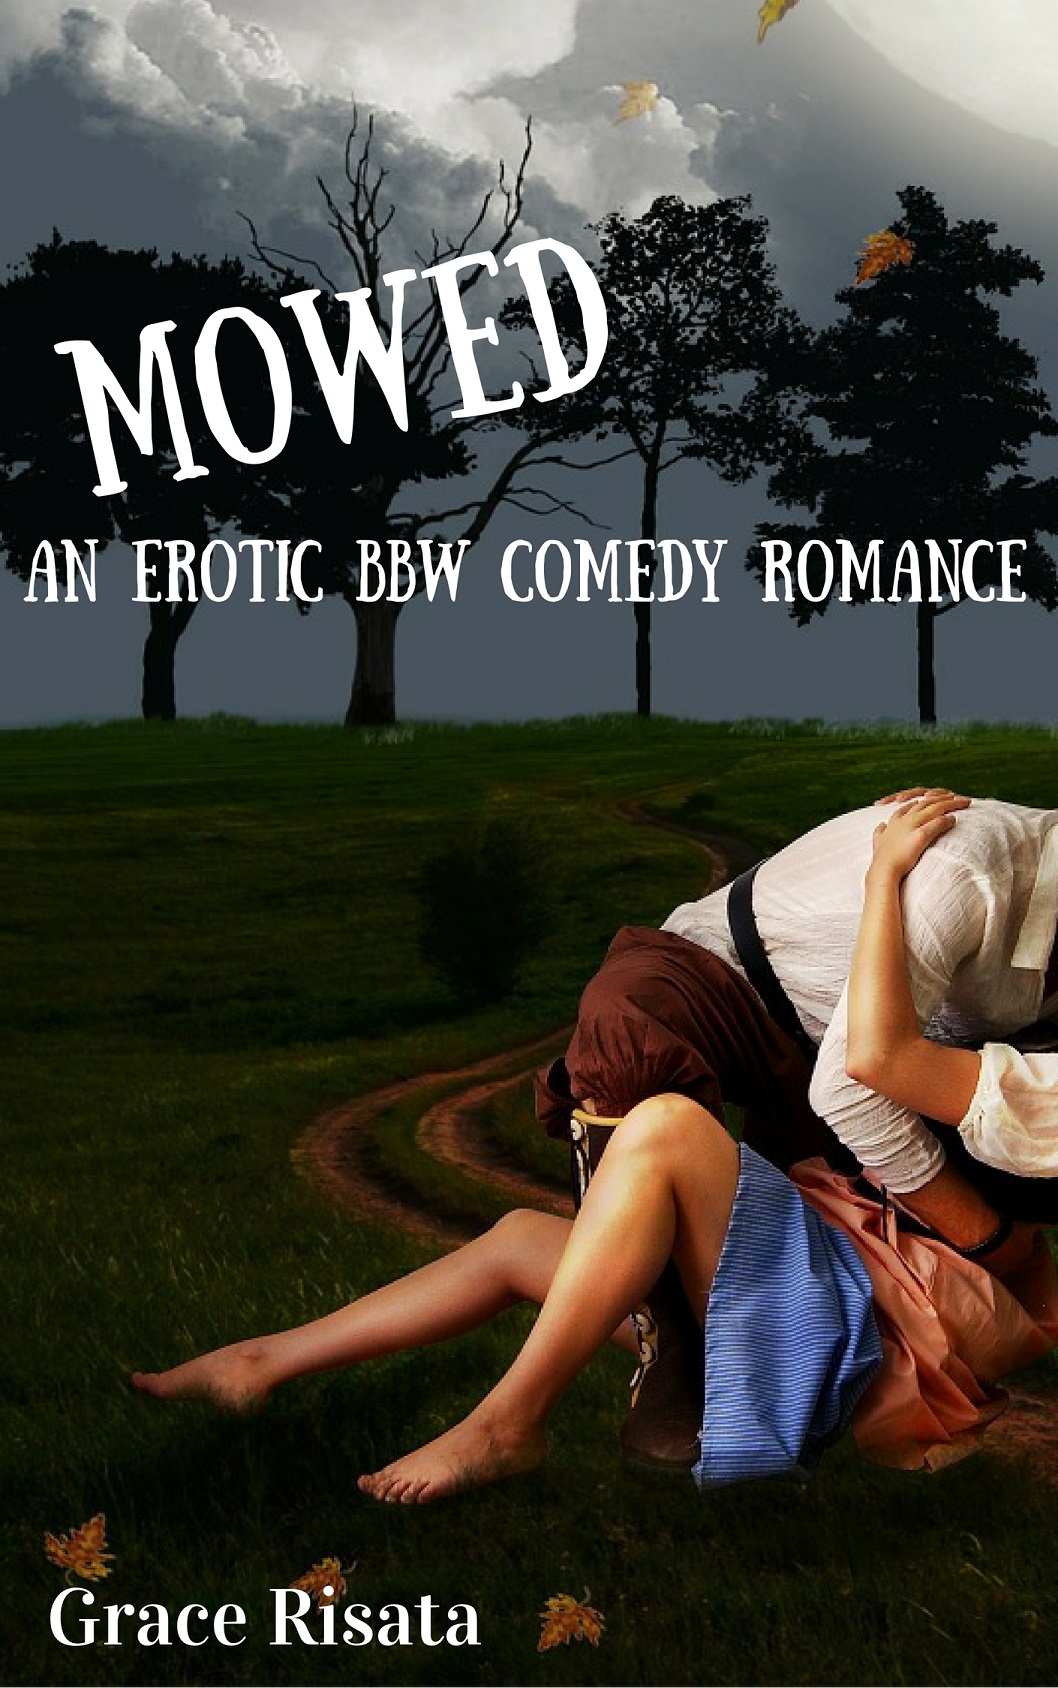 FREE: Mowed: An Erotic BBW Comedy Romance by Grace Risata